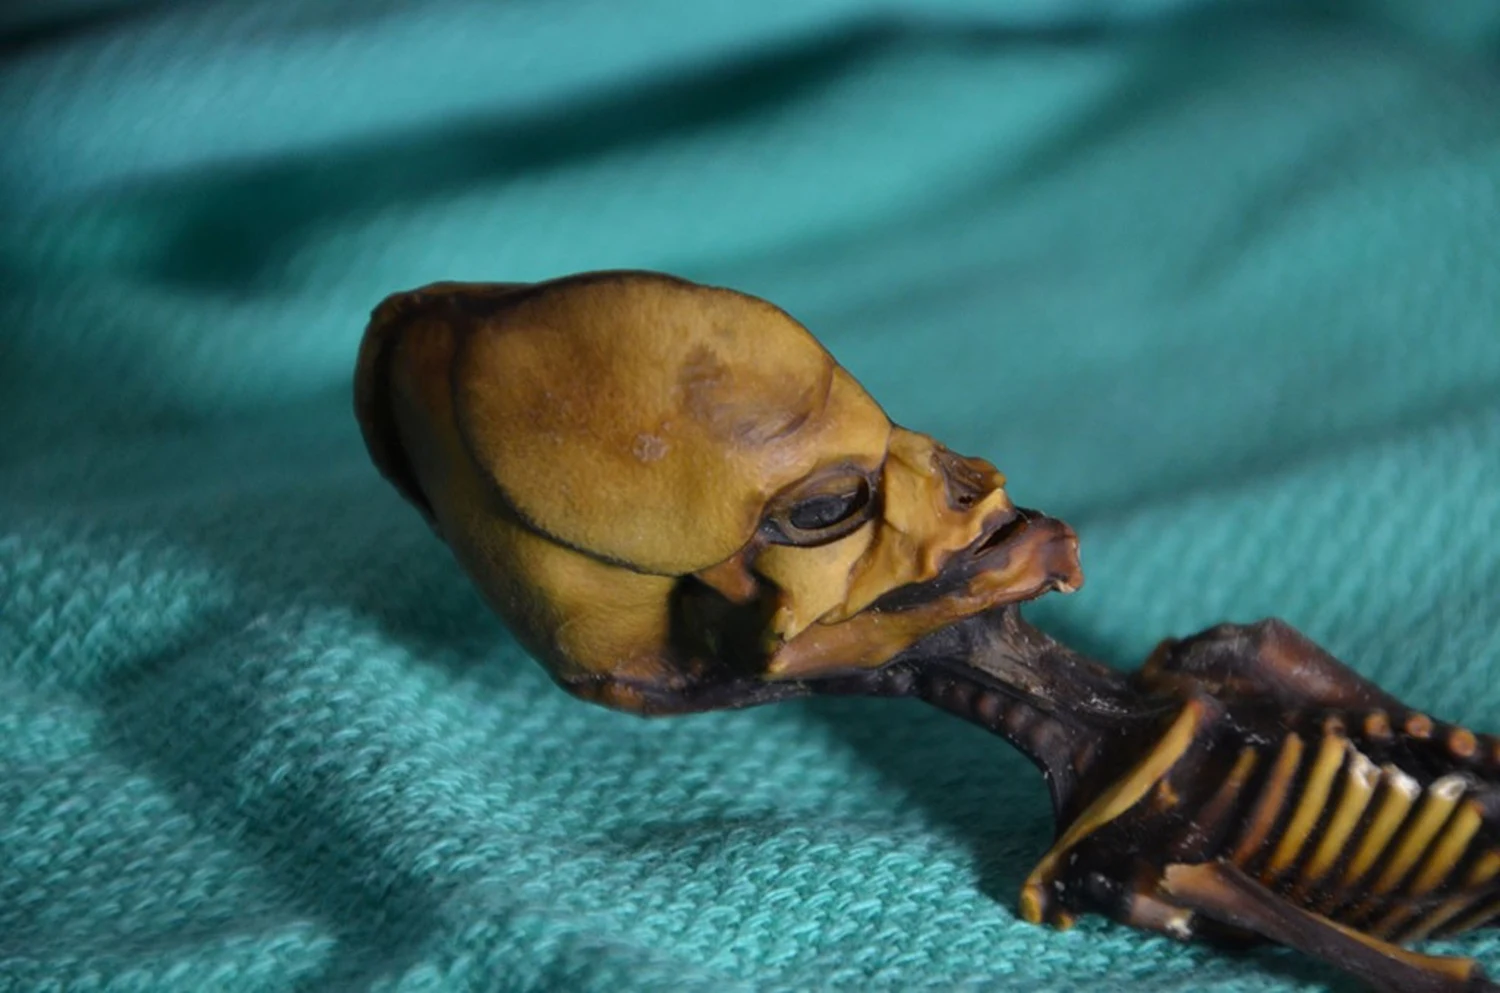 Buyer of 'alien' mummy claims it's an extinct tiny human species